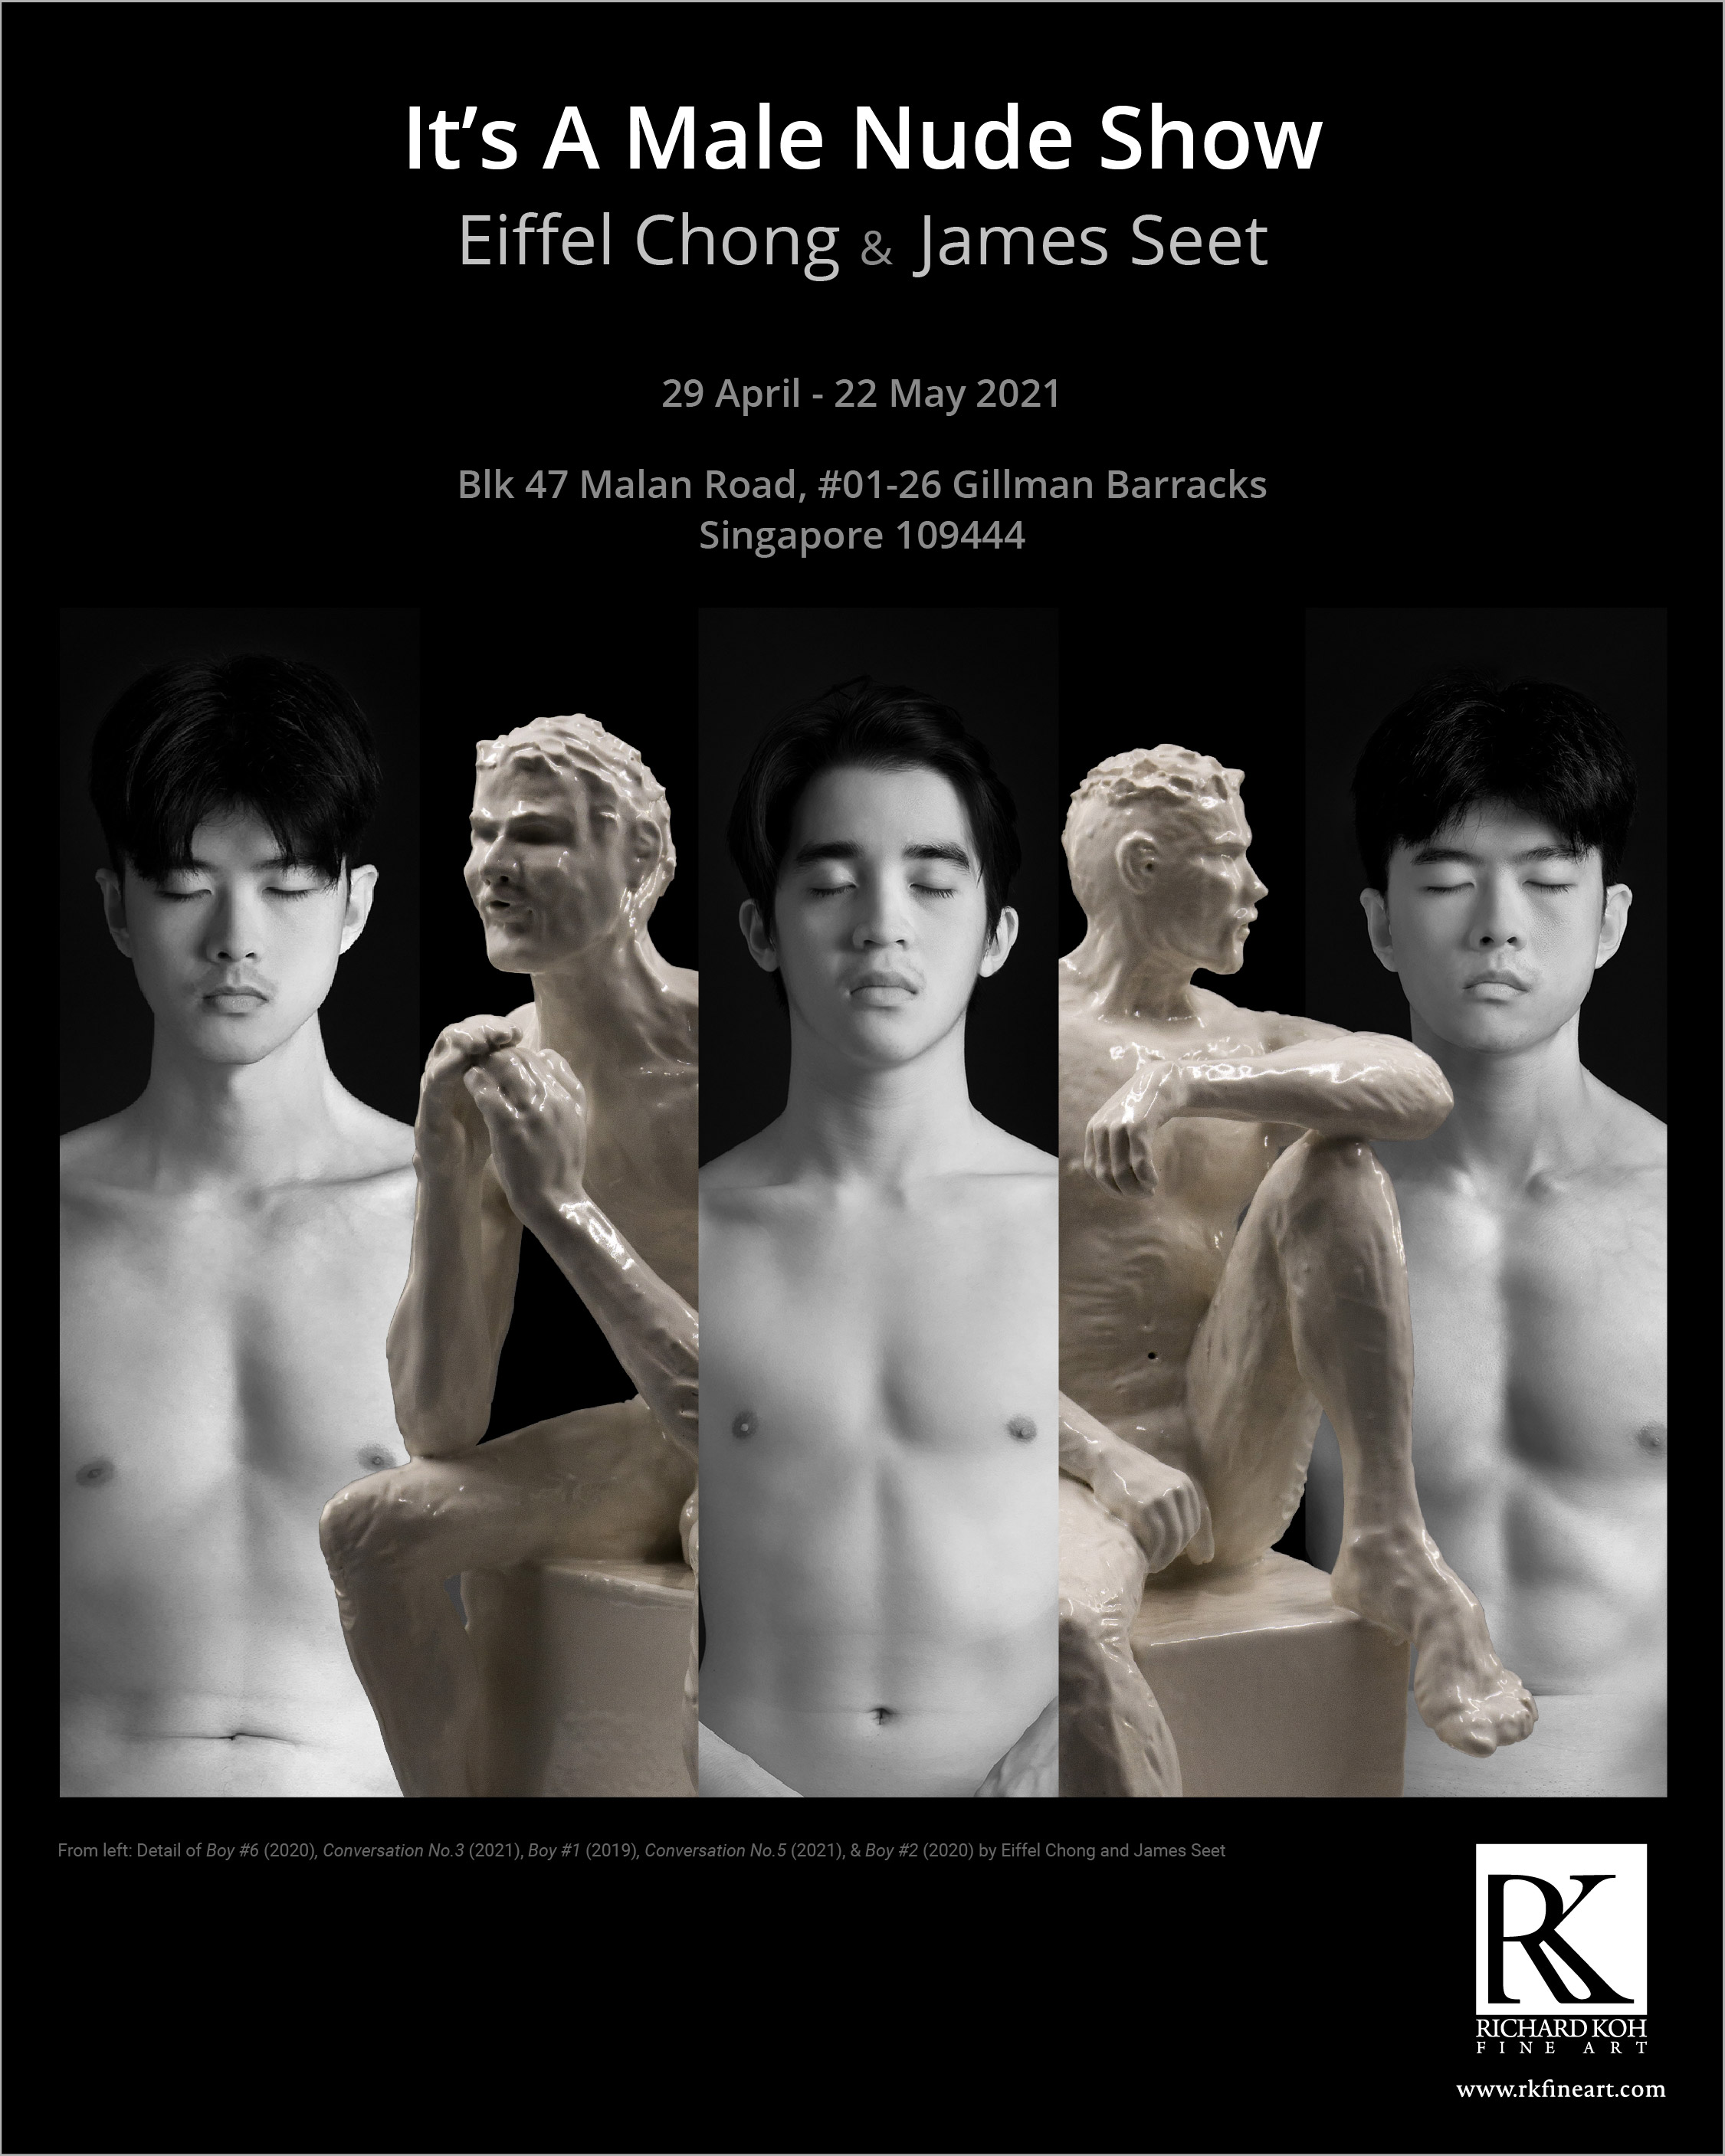   Eiffel Chong & James Seet – It’s A Male Nude Show